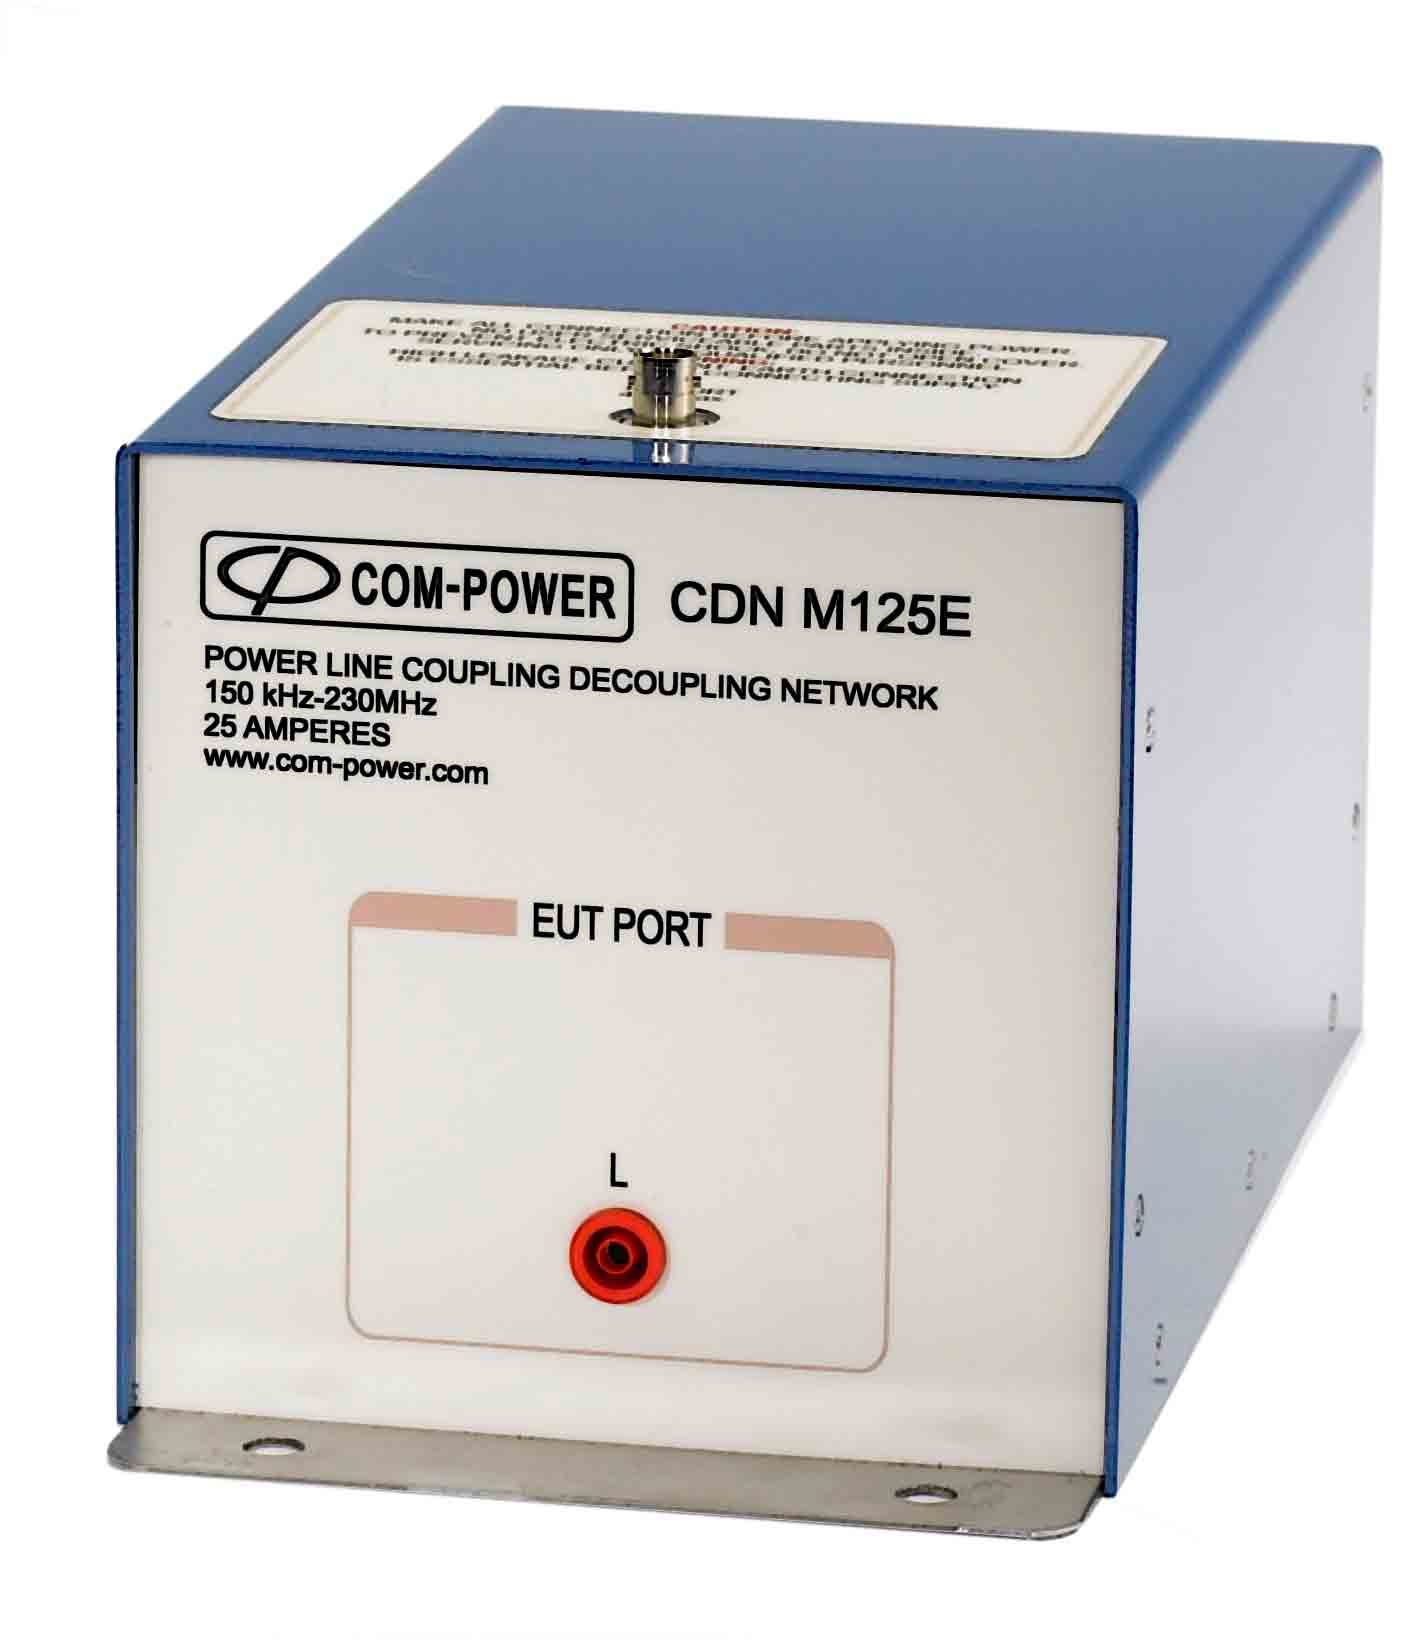 CDN-M125E - Com-Power CDN Coupling Decoupling Networks